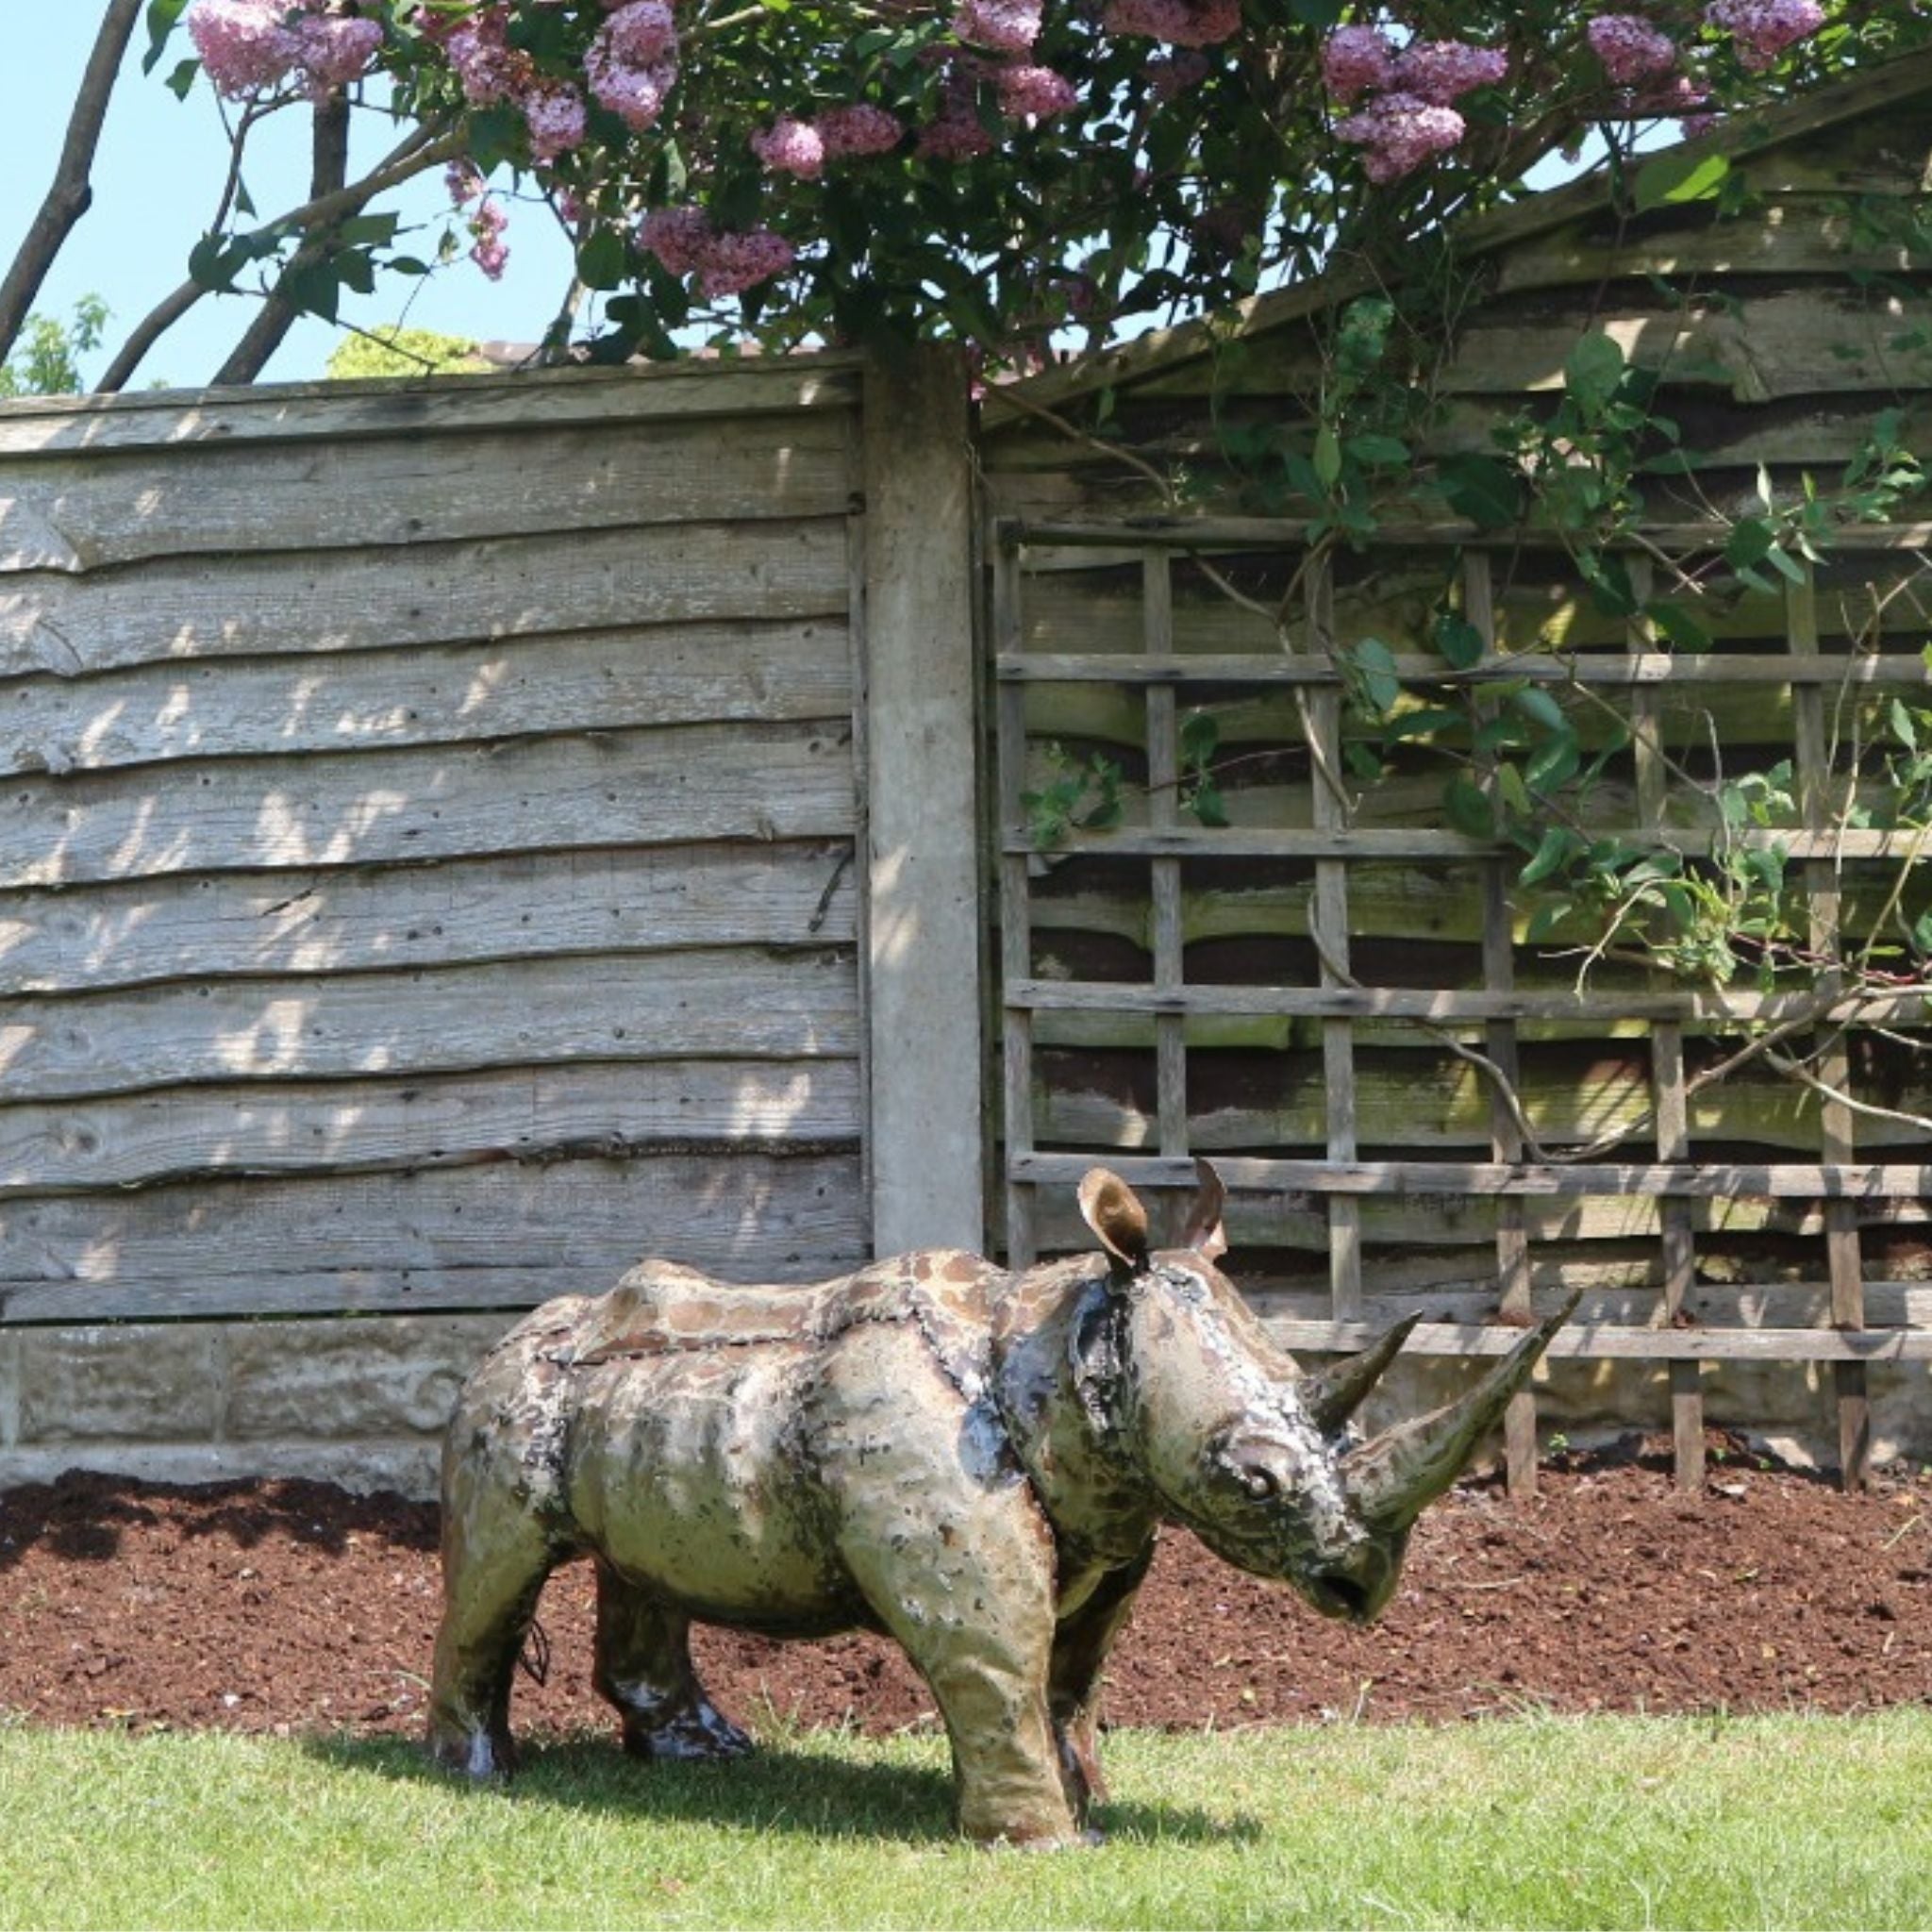 2ft Rhino - Pangea Sculptures